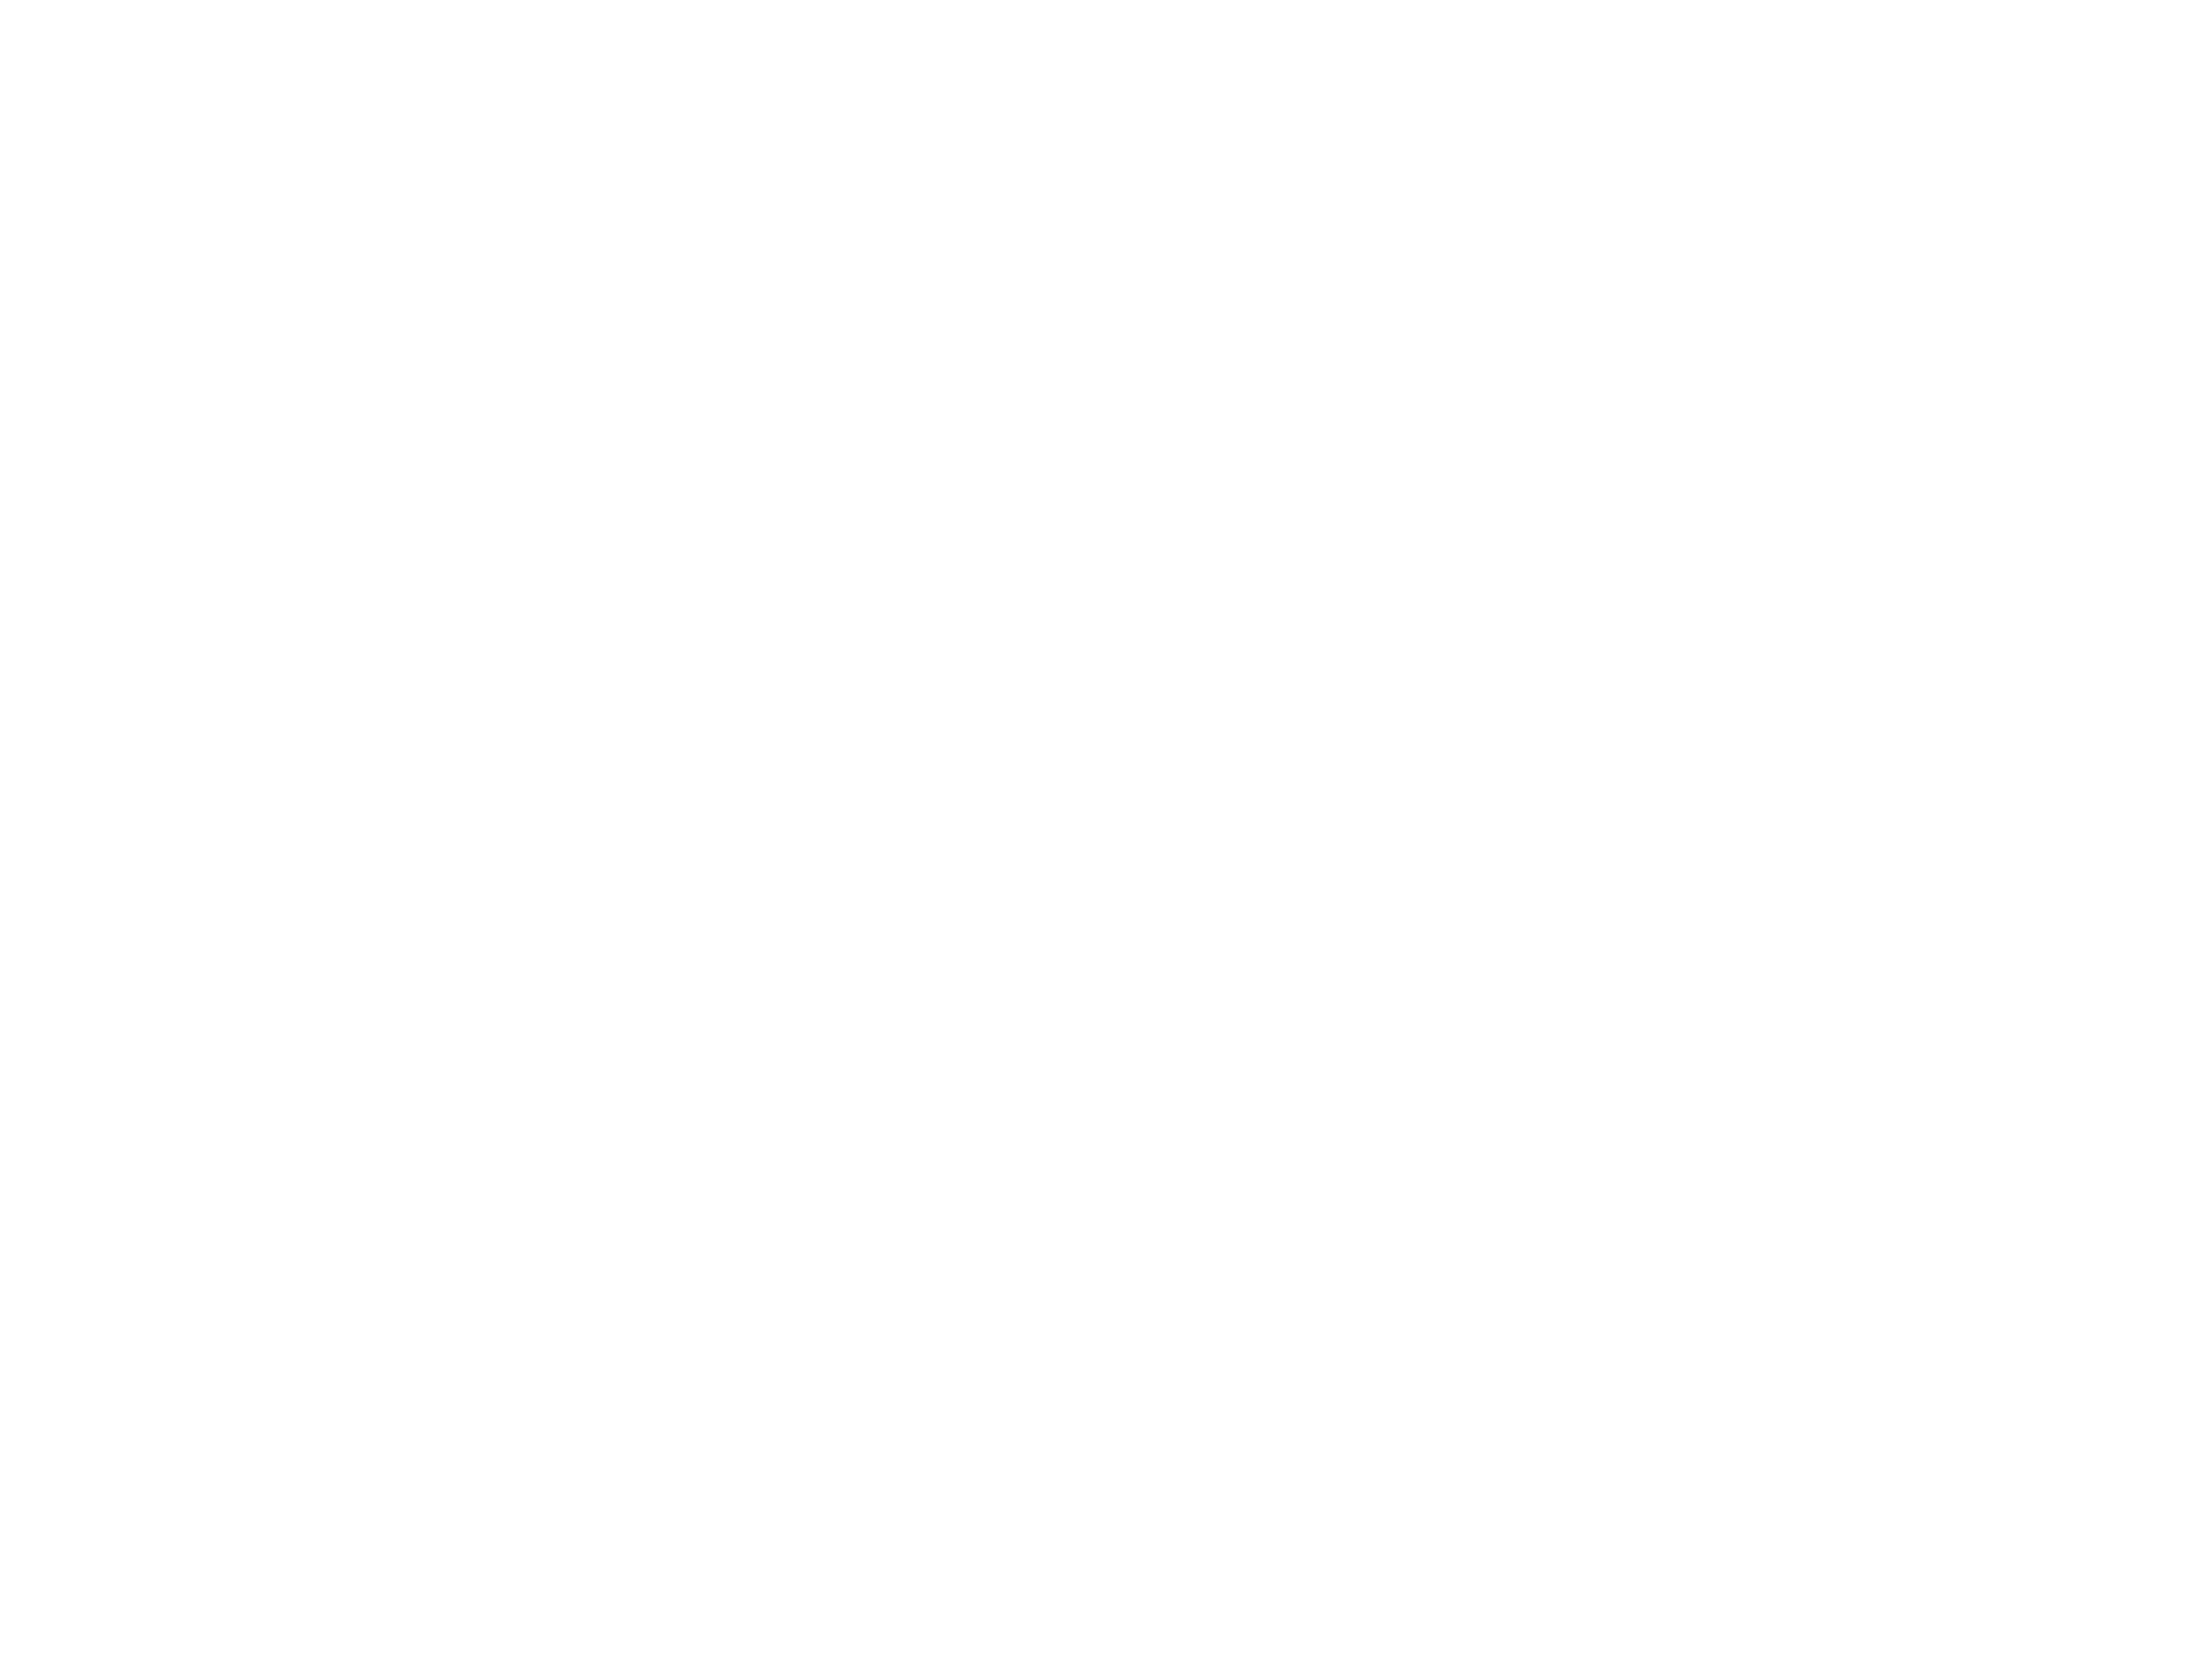 Wealth-X